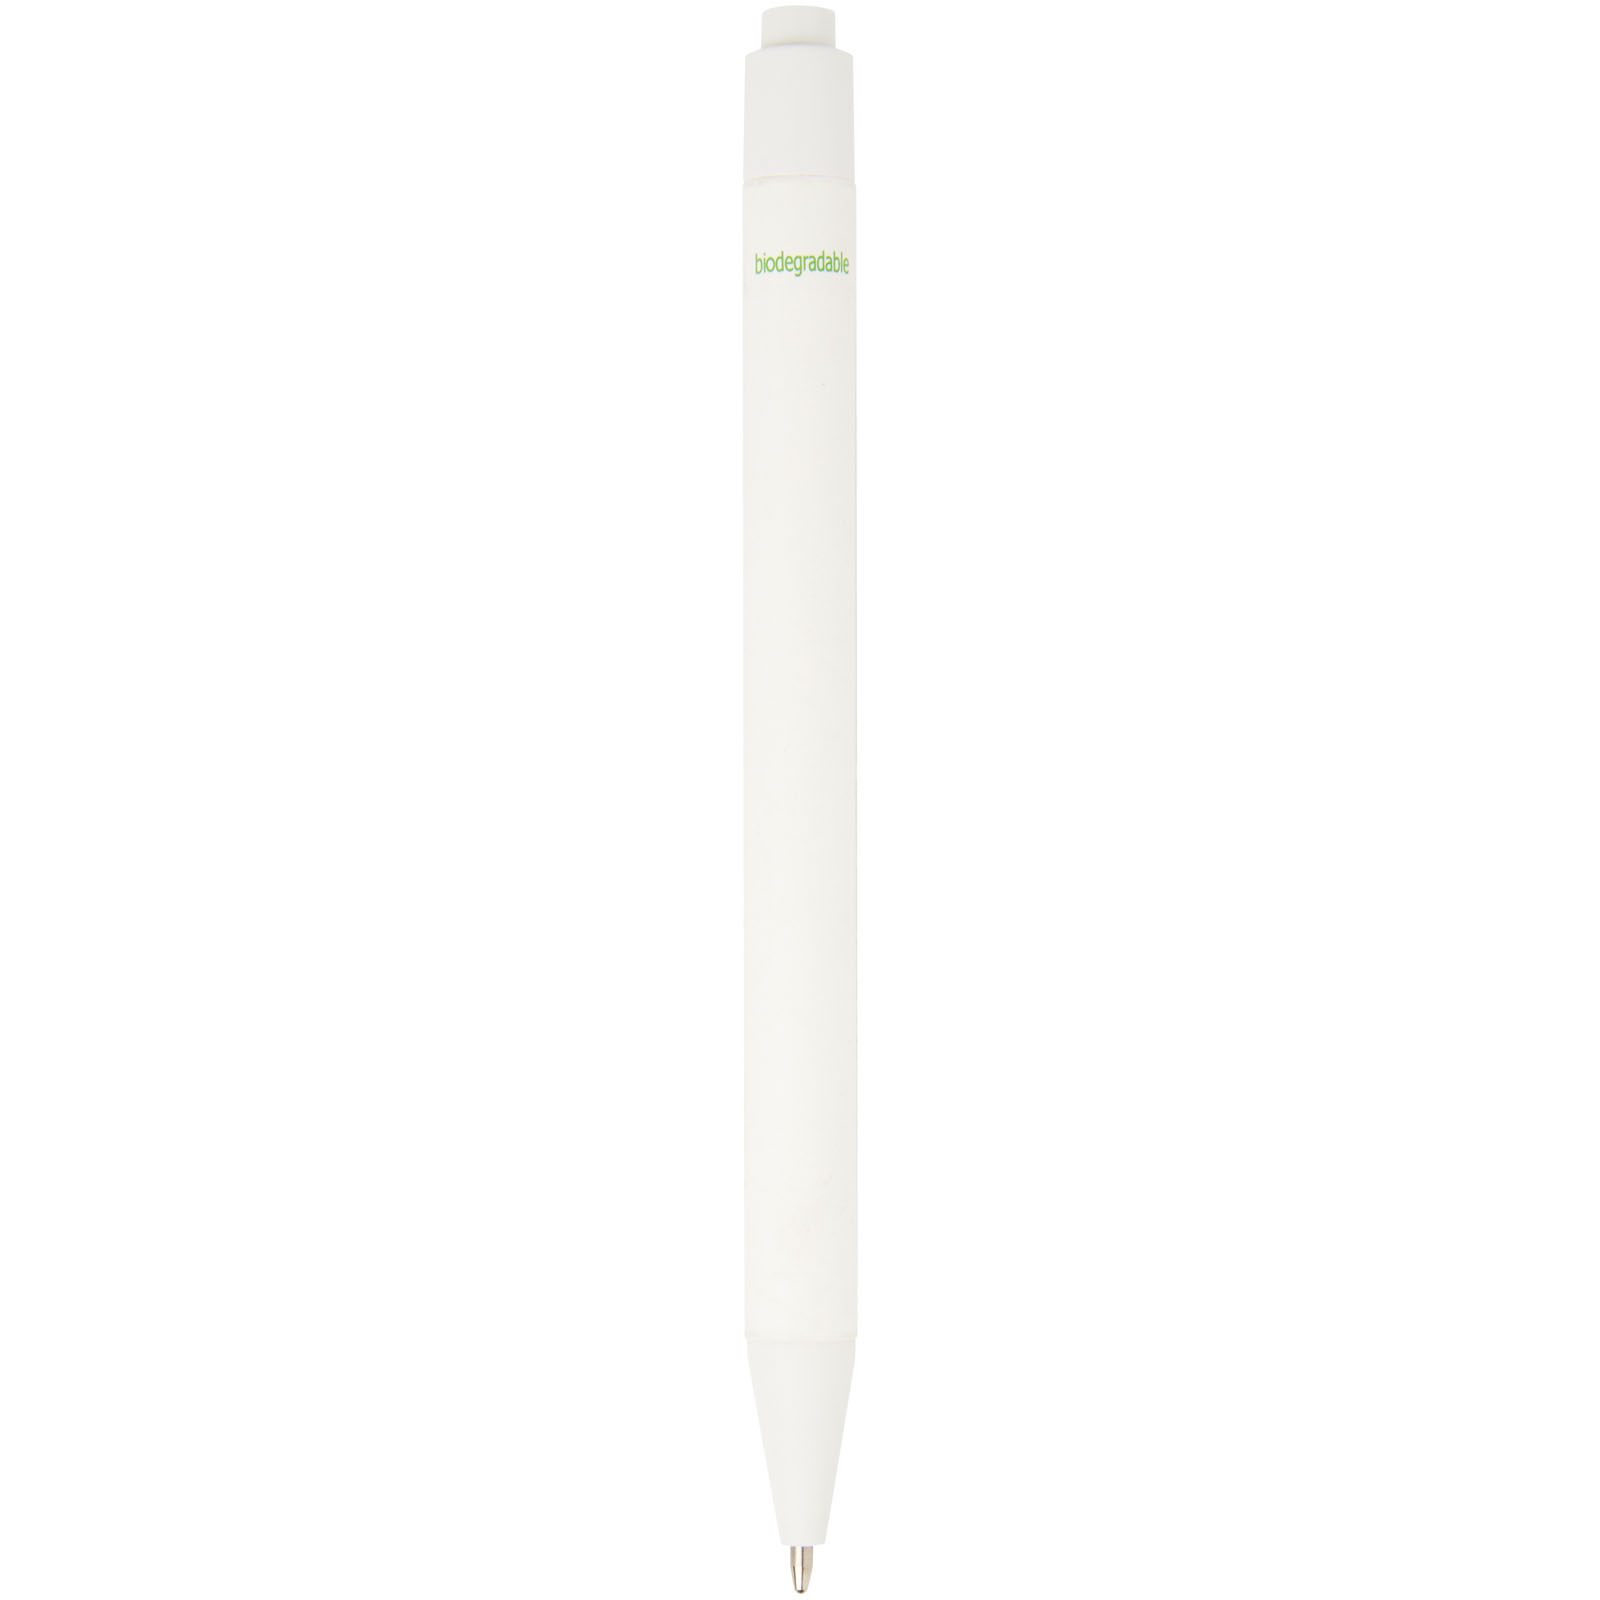 Advertising Ballpoint Pens - Chartik monochromatic recycled paper ballpoint pen with matte finish - 1